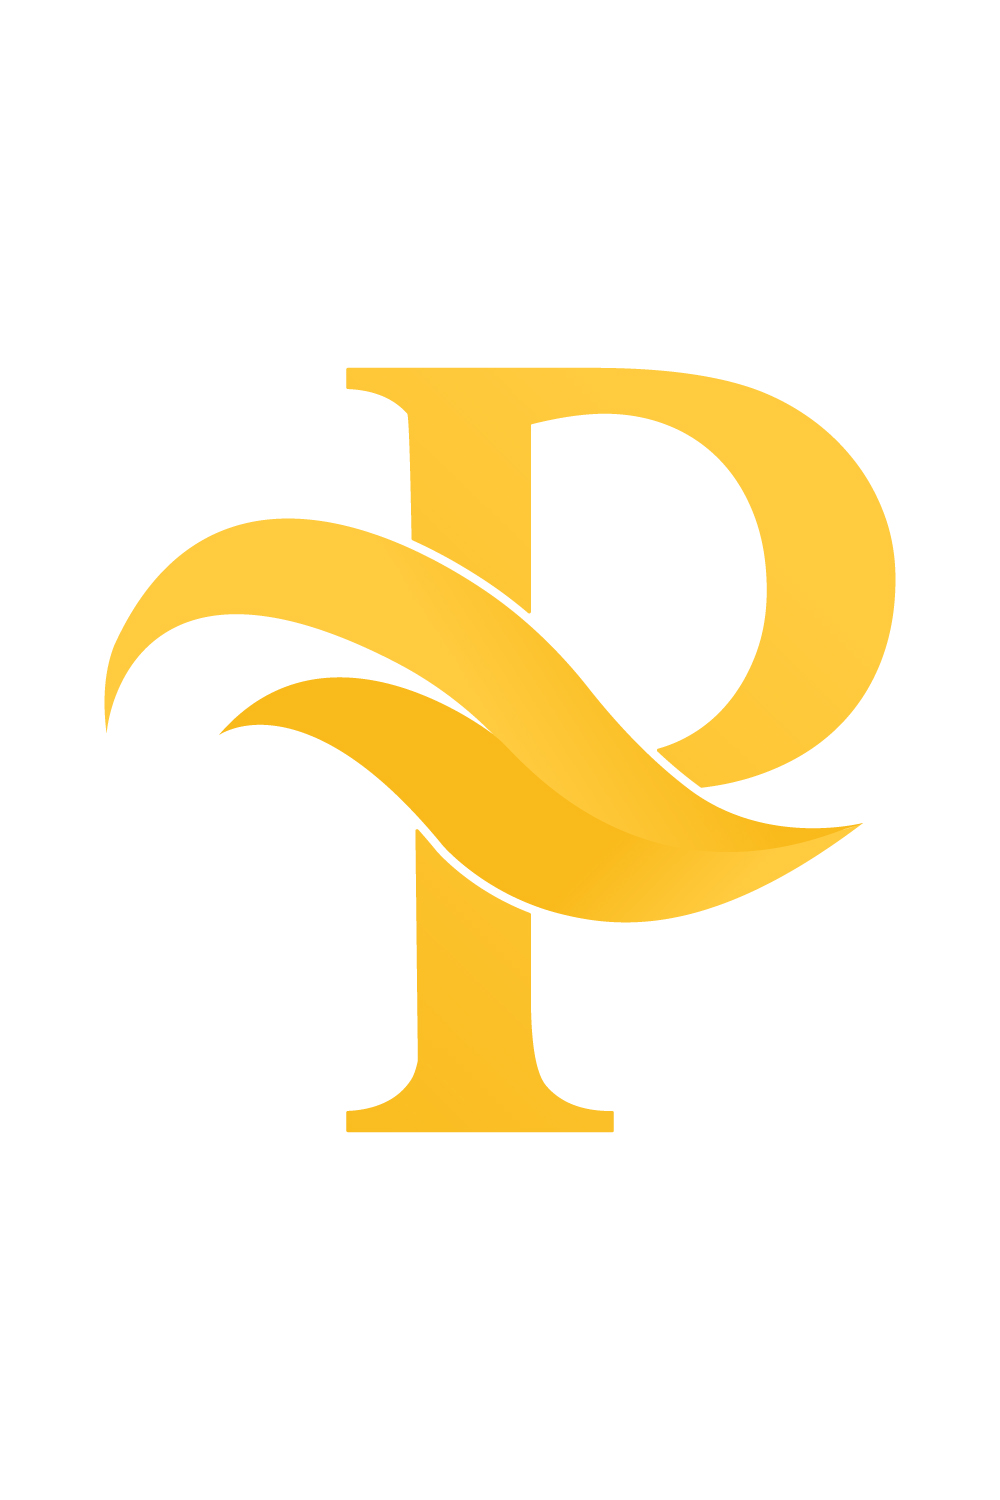 Initials P letter logo deign vector images P logo golden color best company identity pinterest preview image.